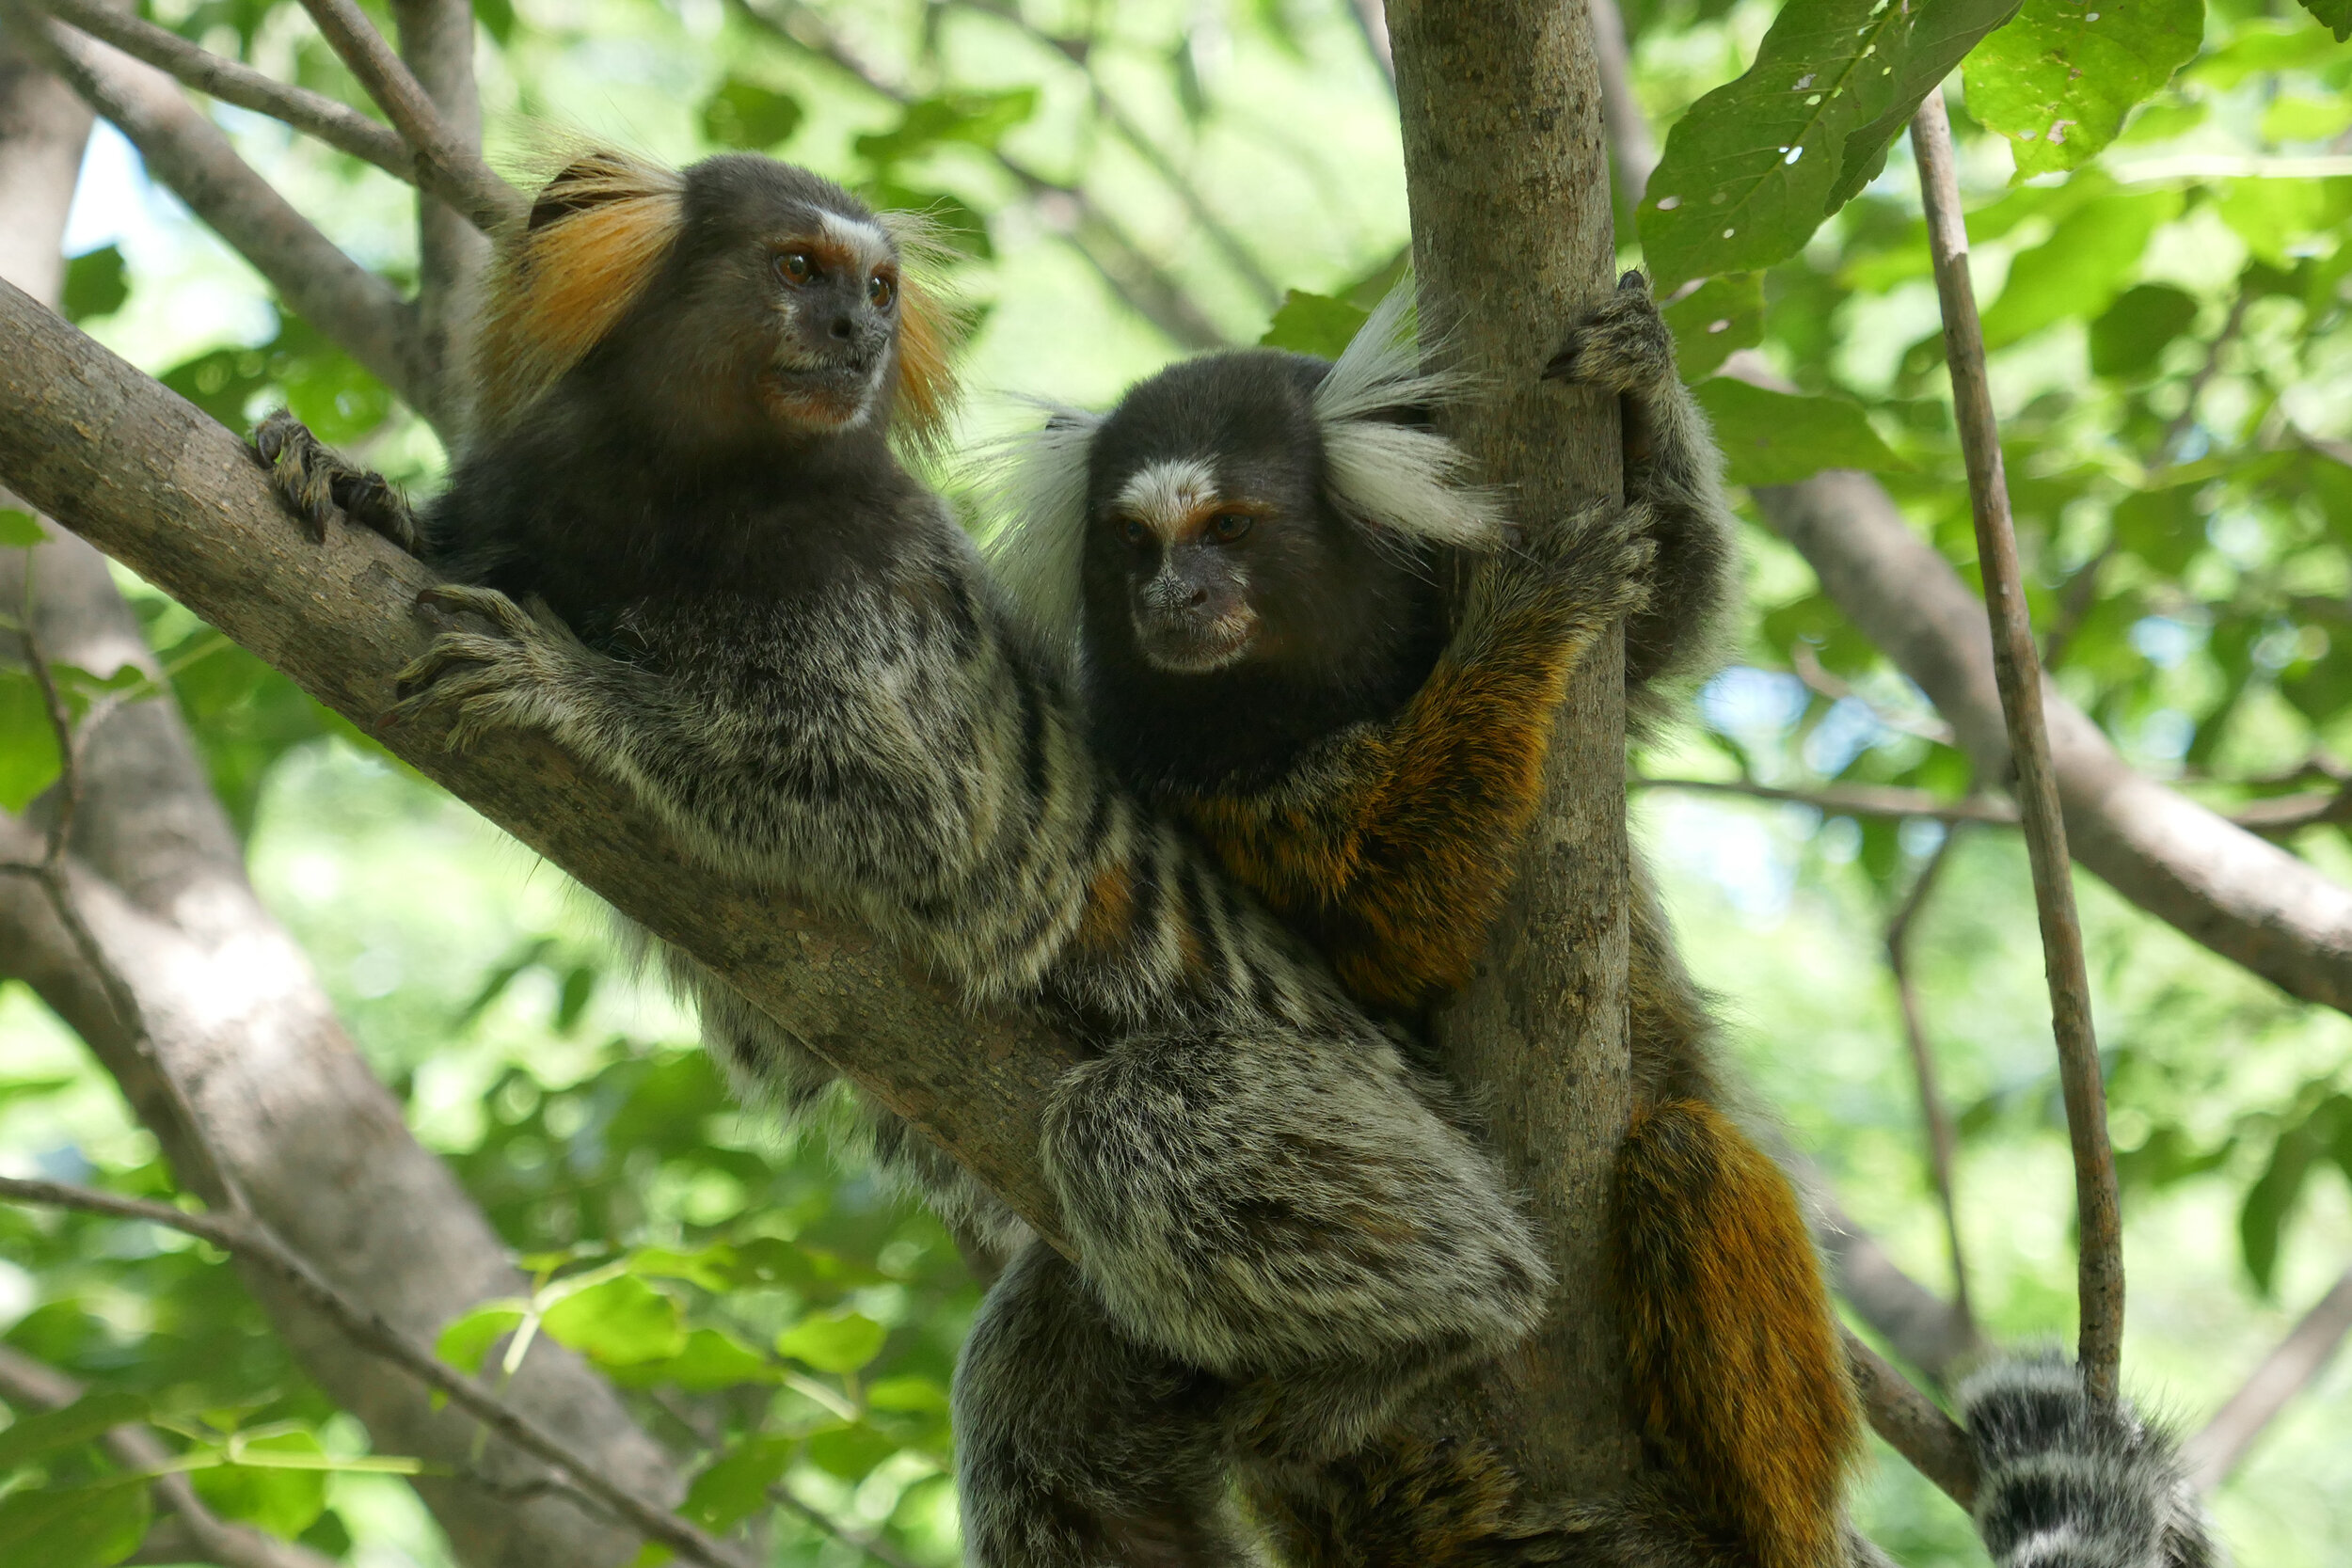 Marmoset monkeys listen and understand conversations between other marmosets